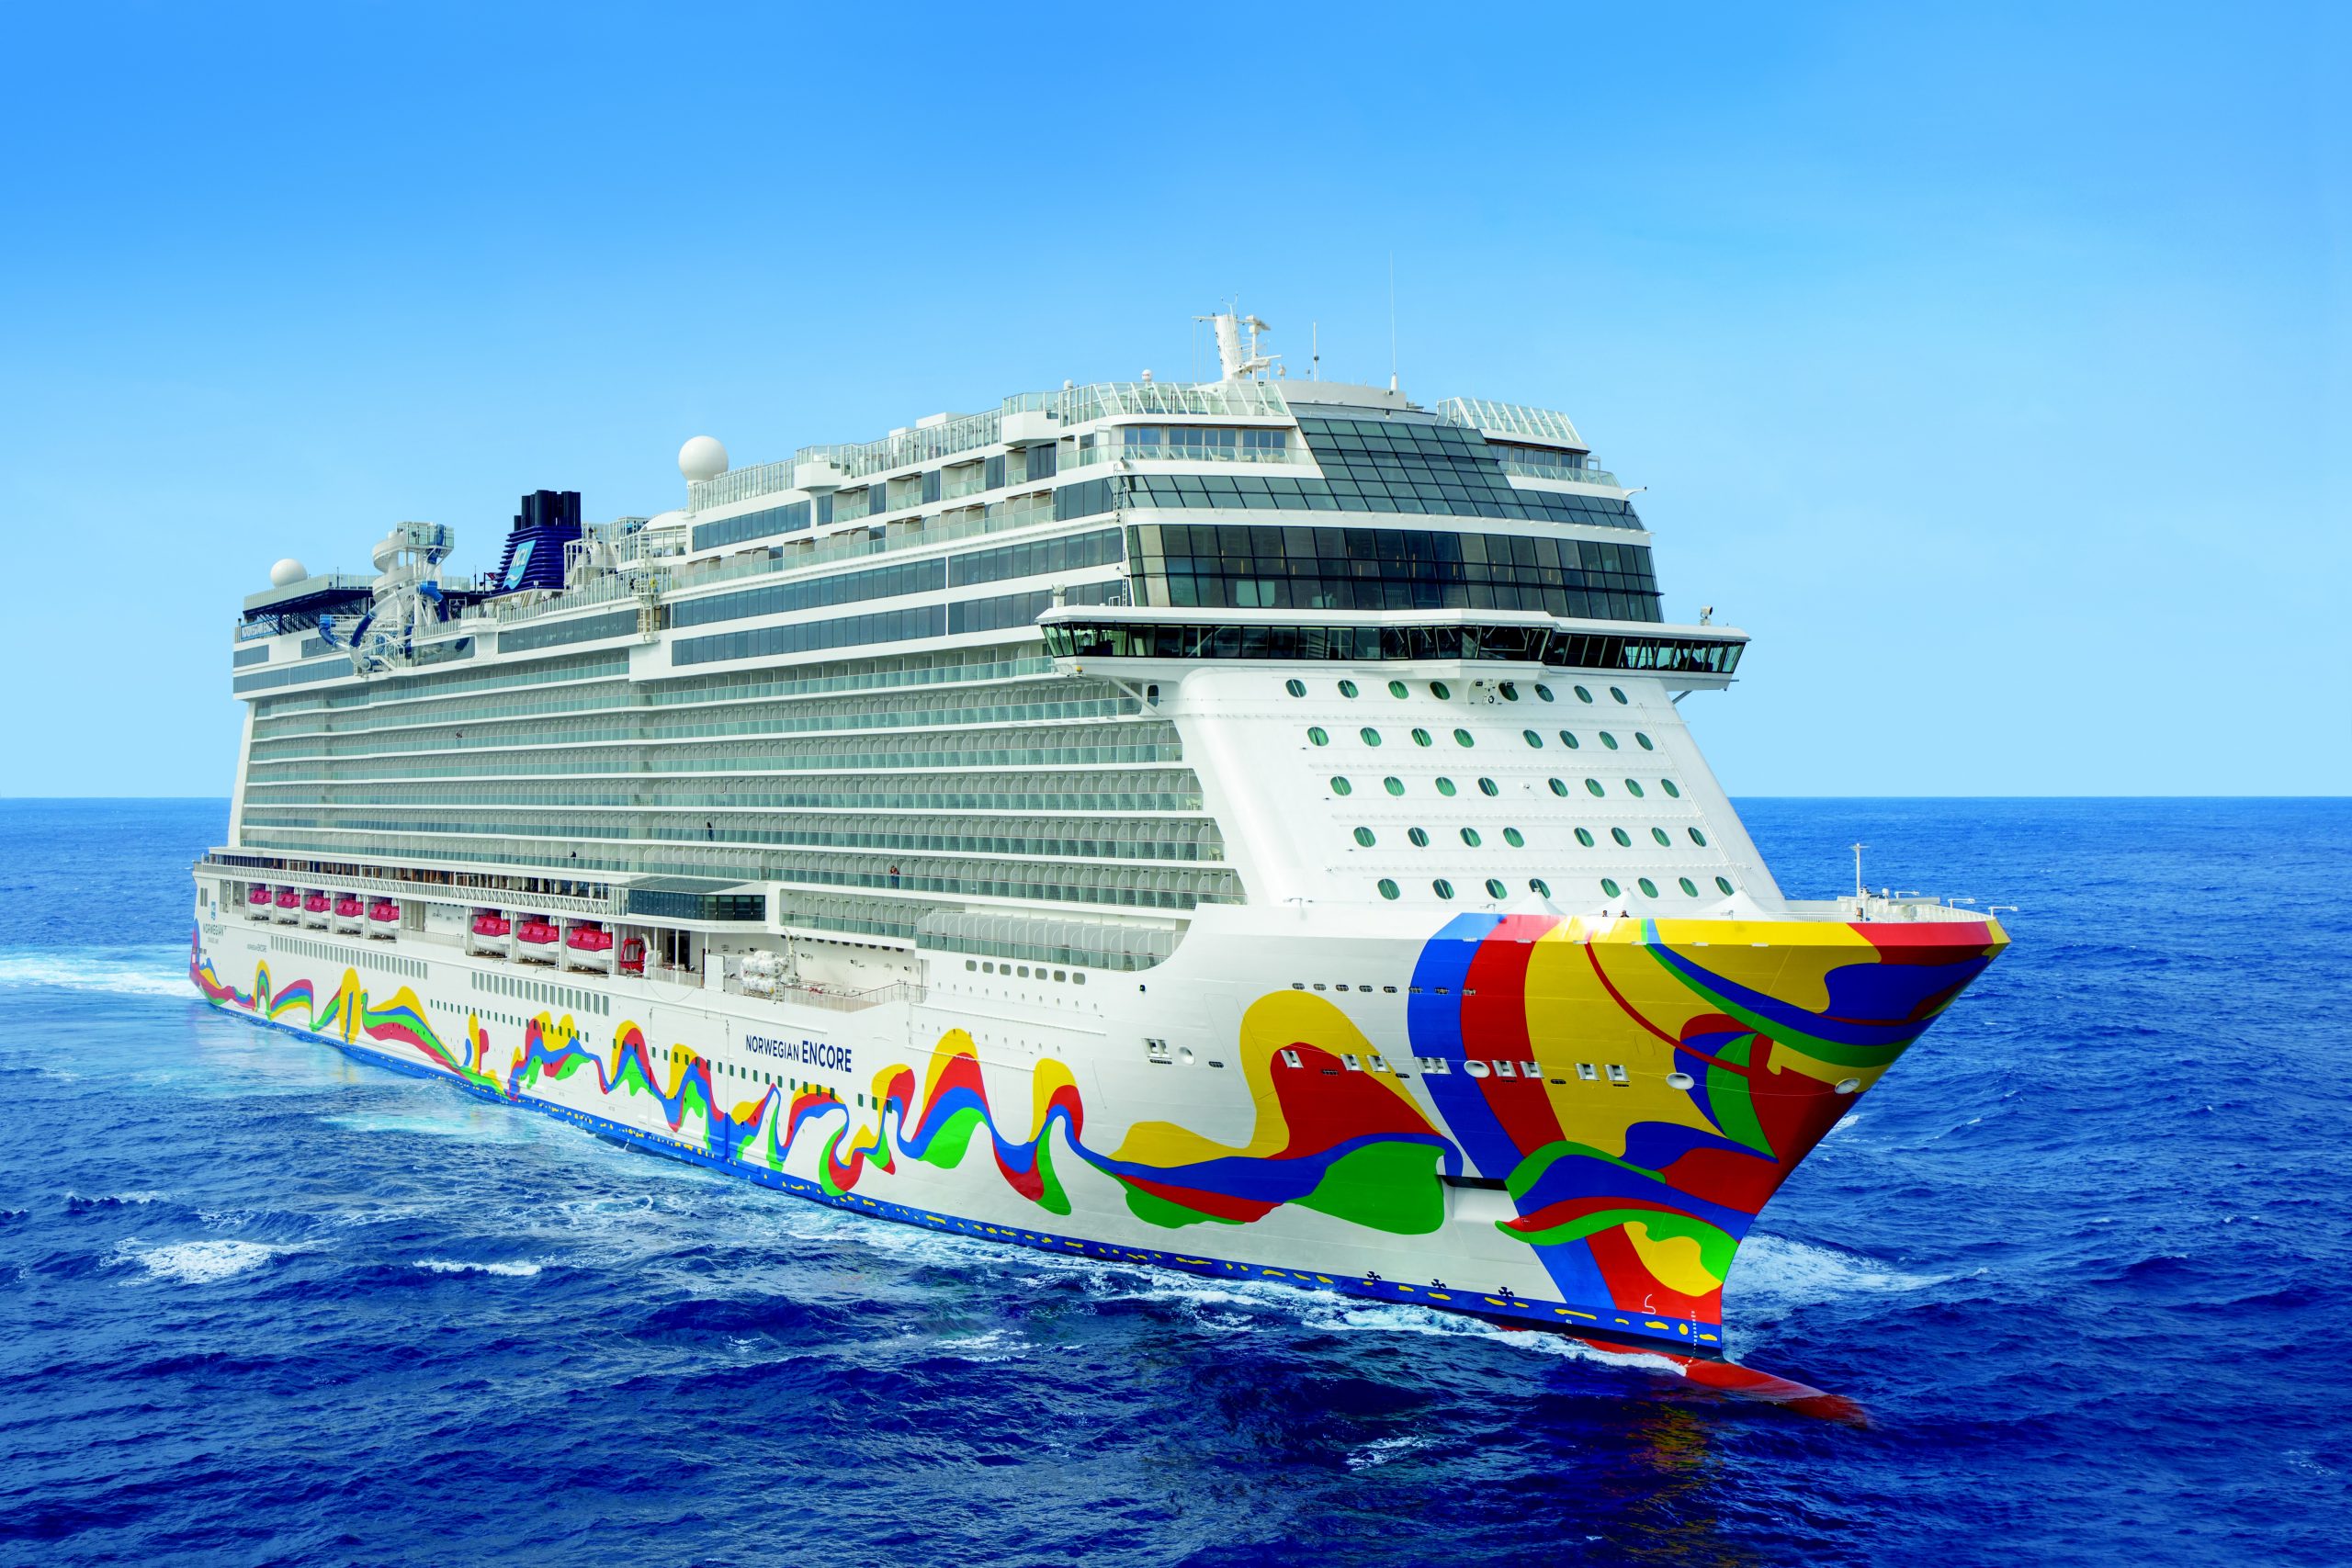 Cruise Ships – Introducing the Norwegian Encore Cruise Ship by Norwegian Cruise Line